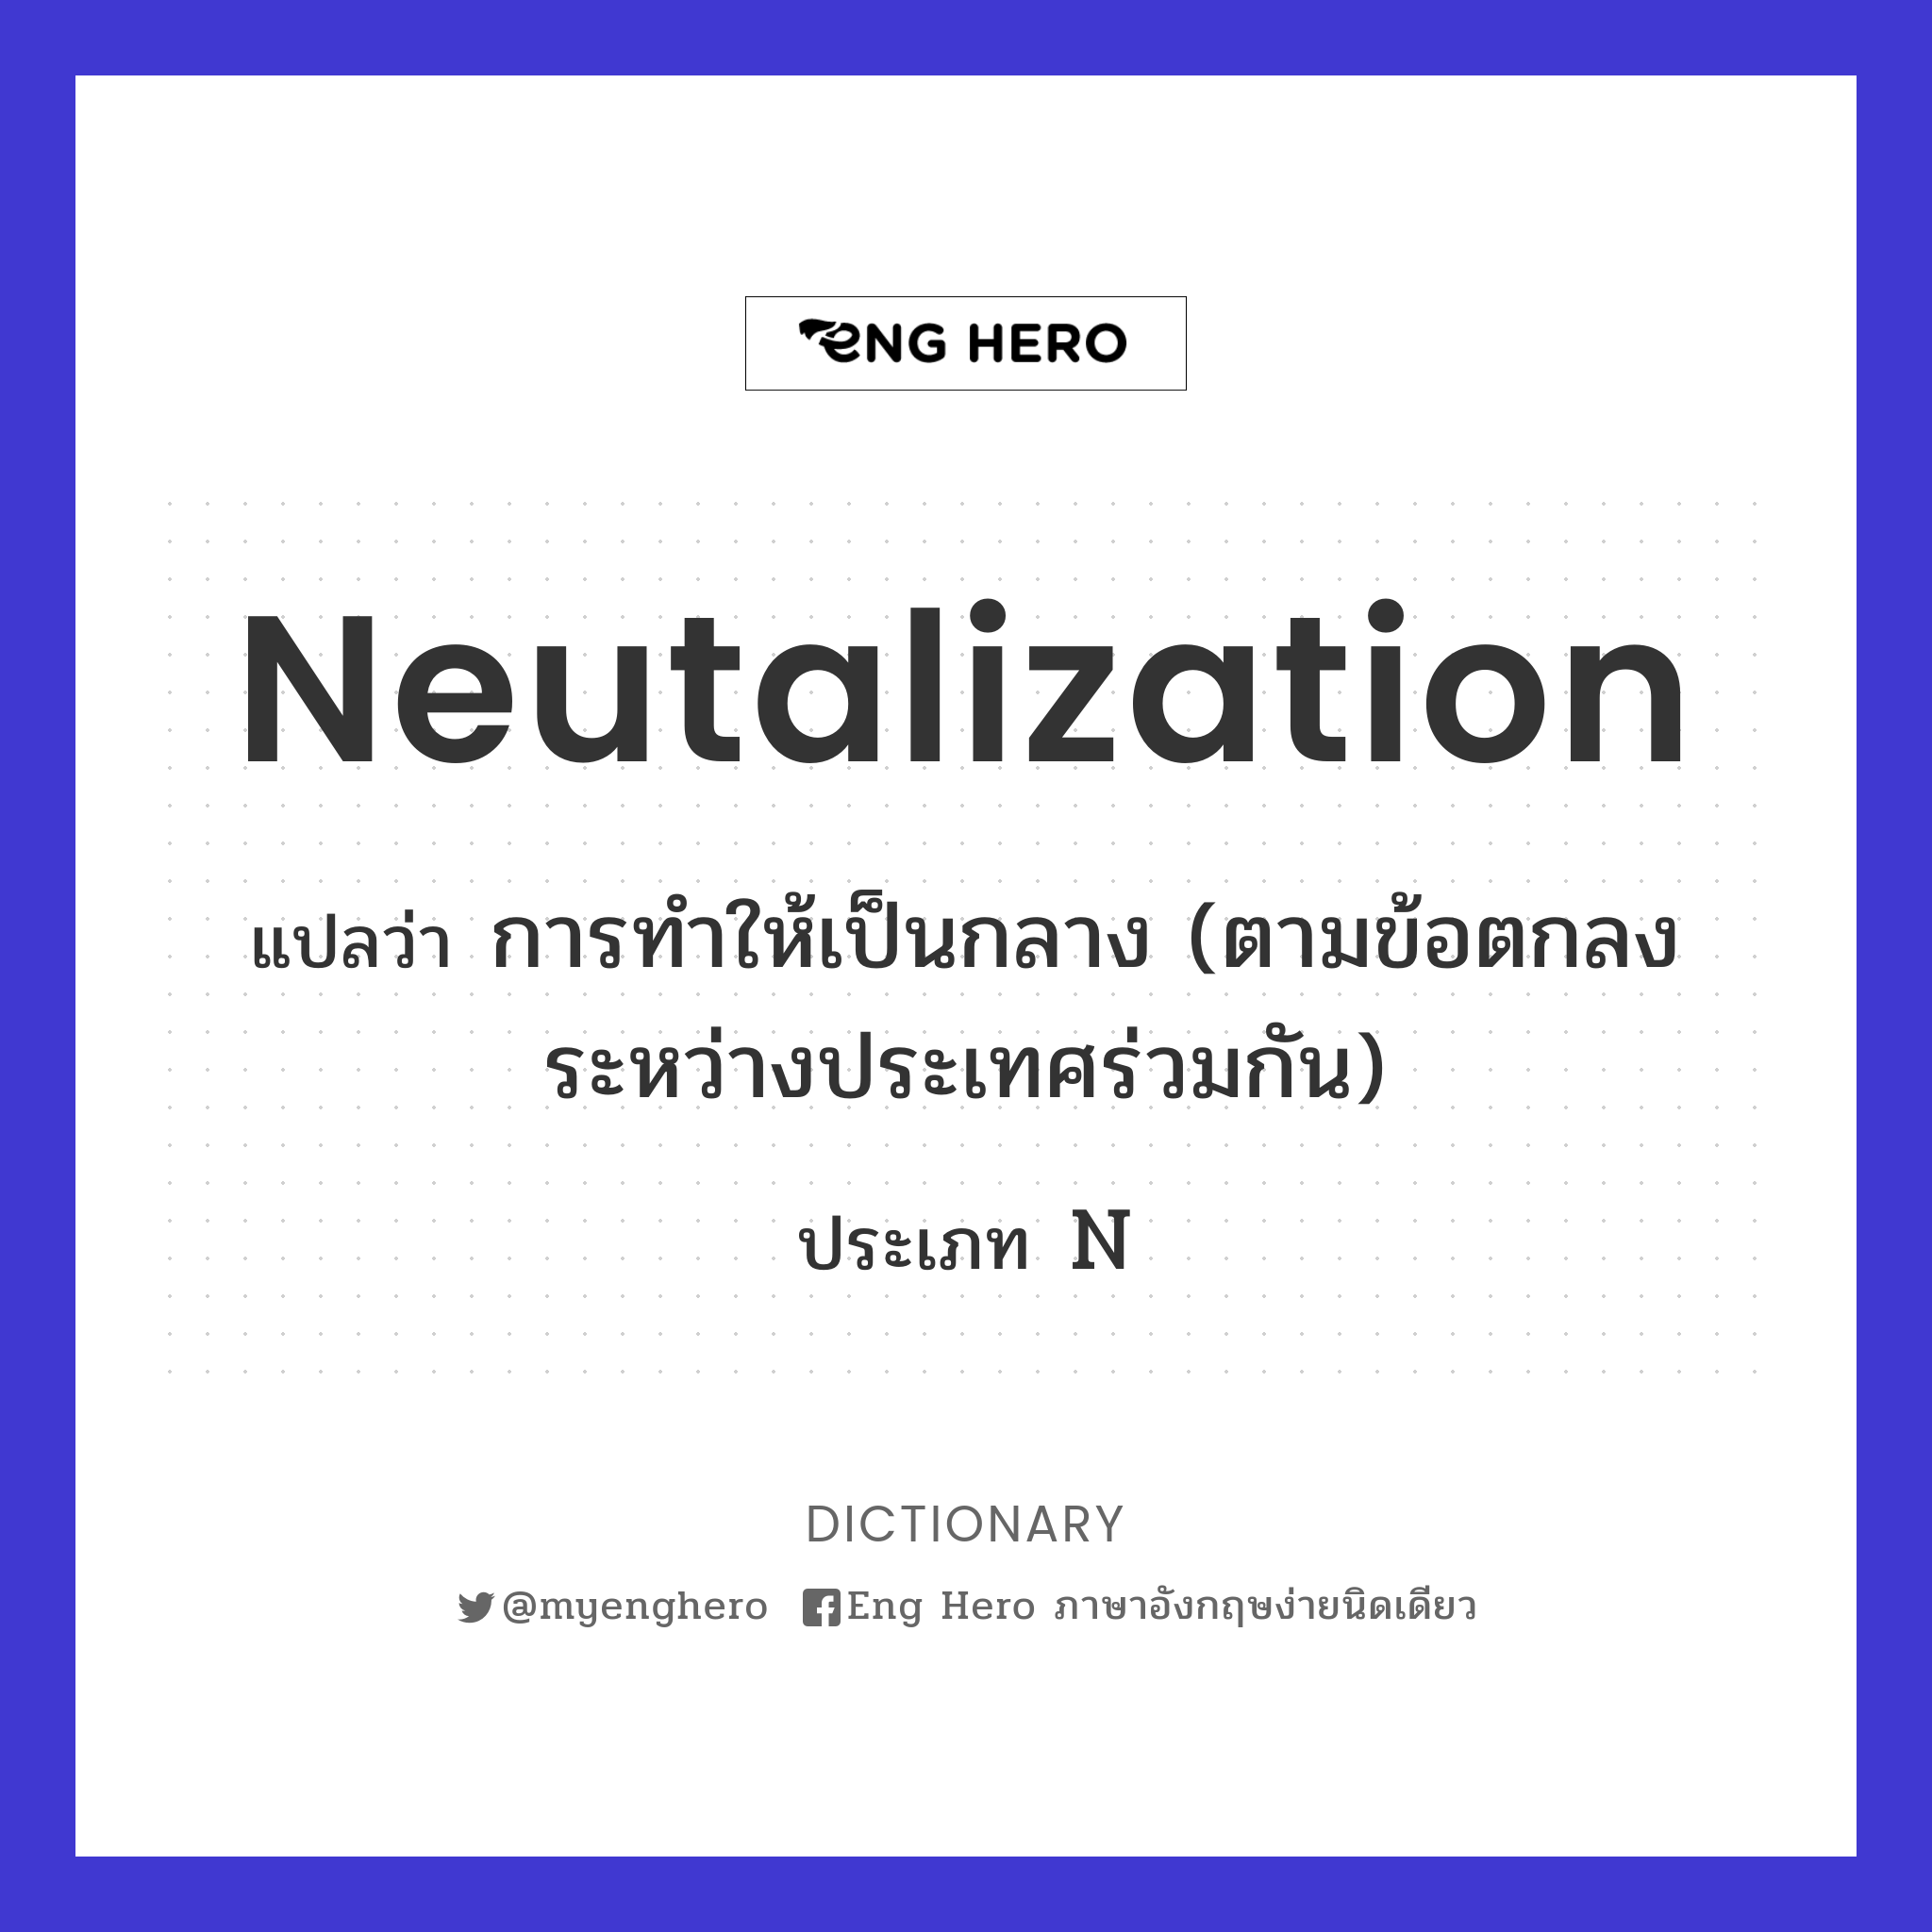 neutalization